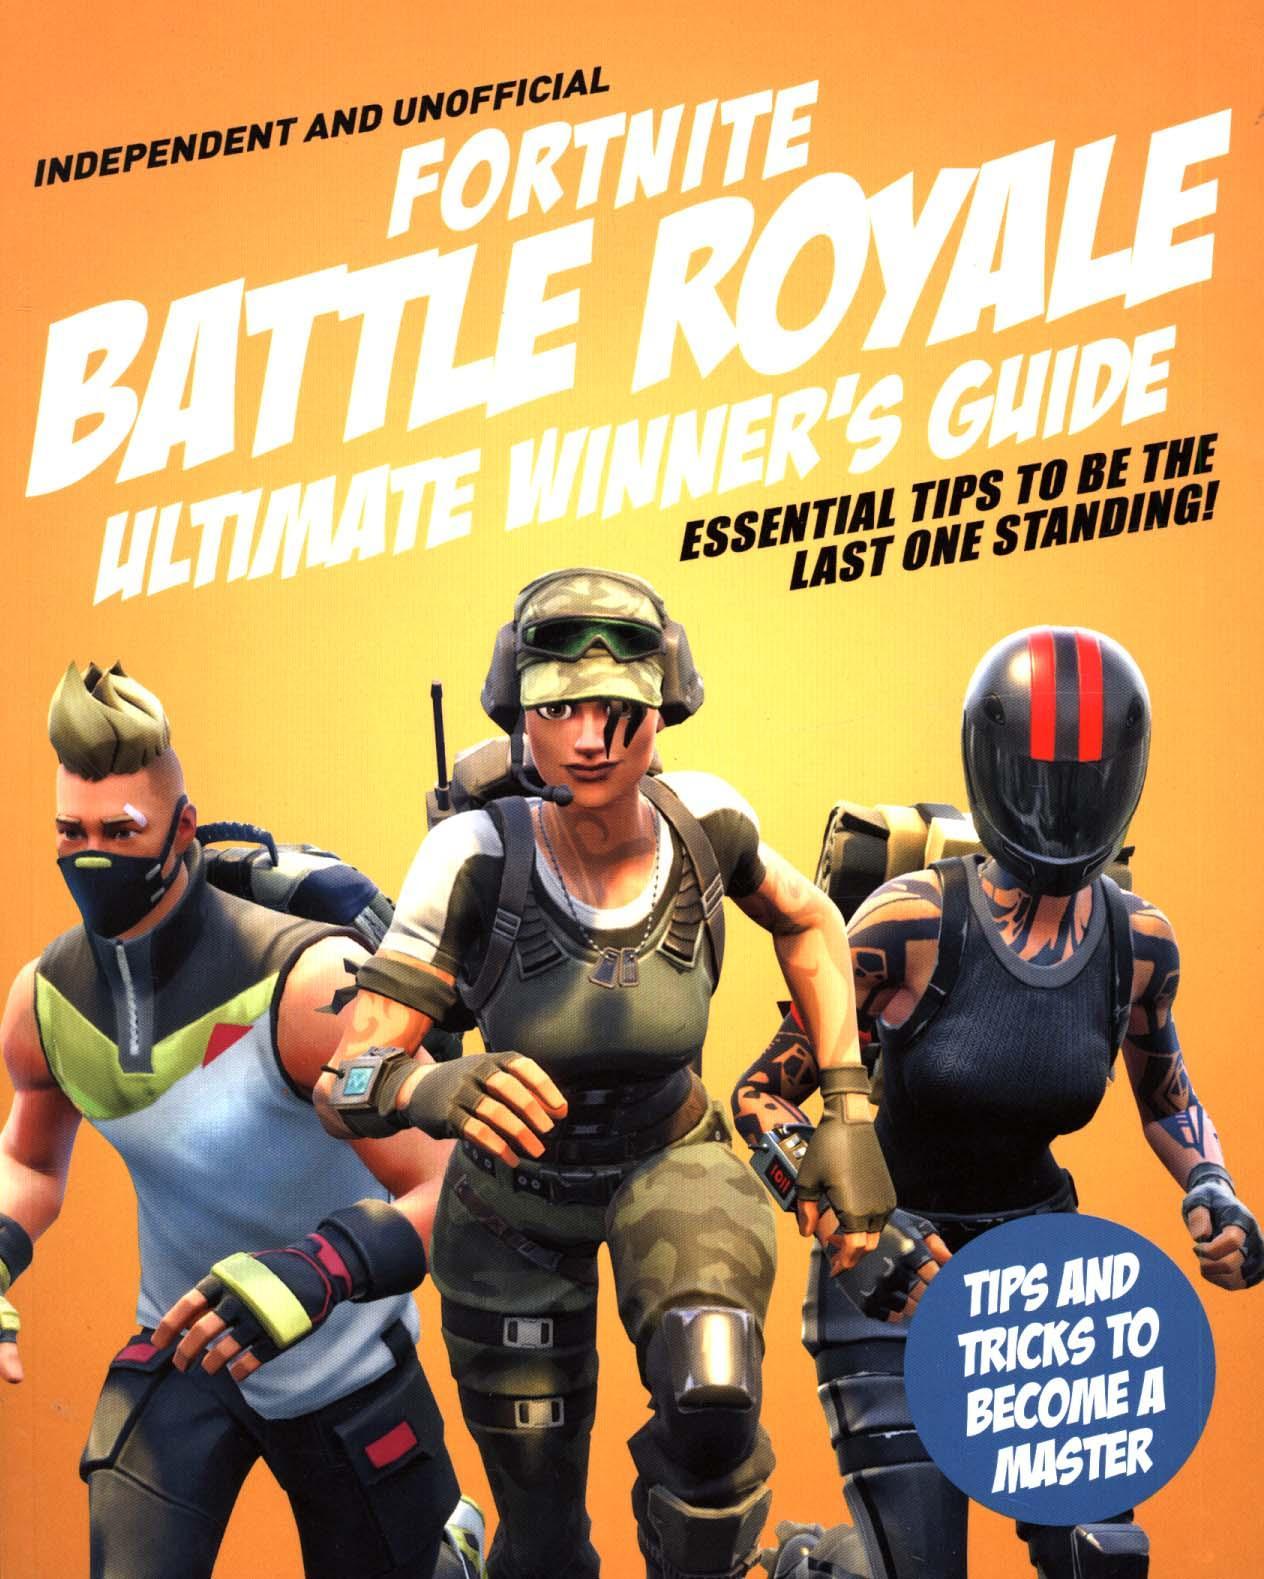 Fortnite Ultimate Winner's Guide - Kevin Pettman